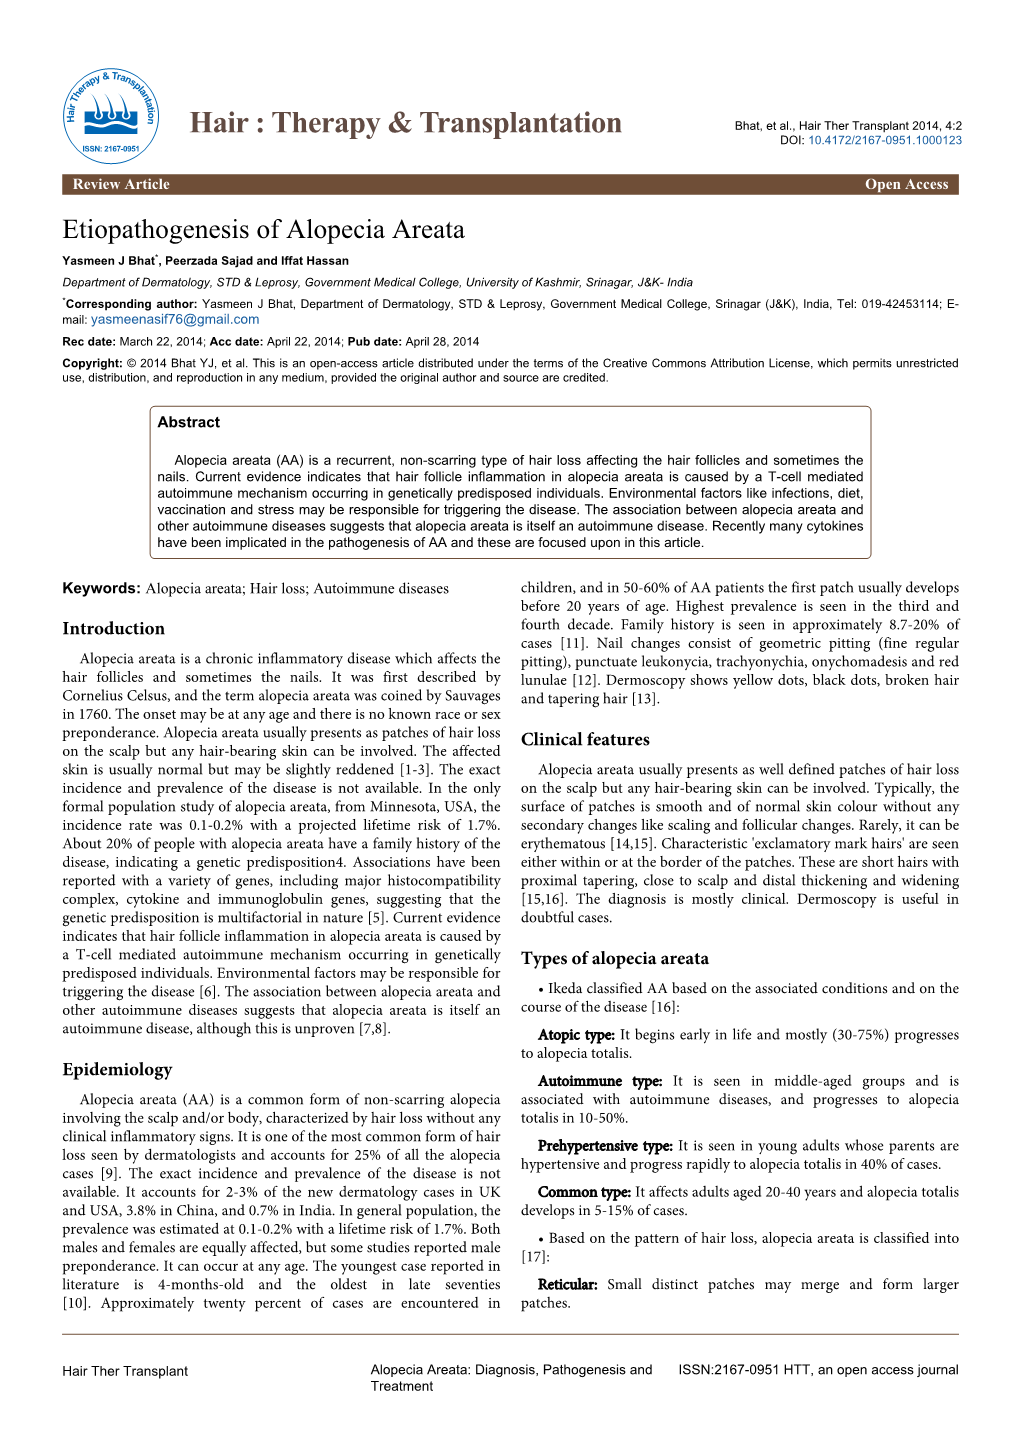 Etiopathogenesis of Alopecia Areata